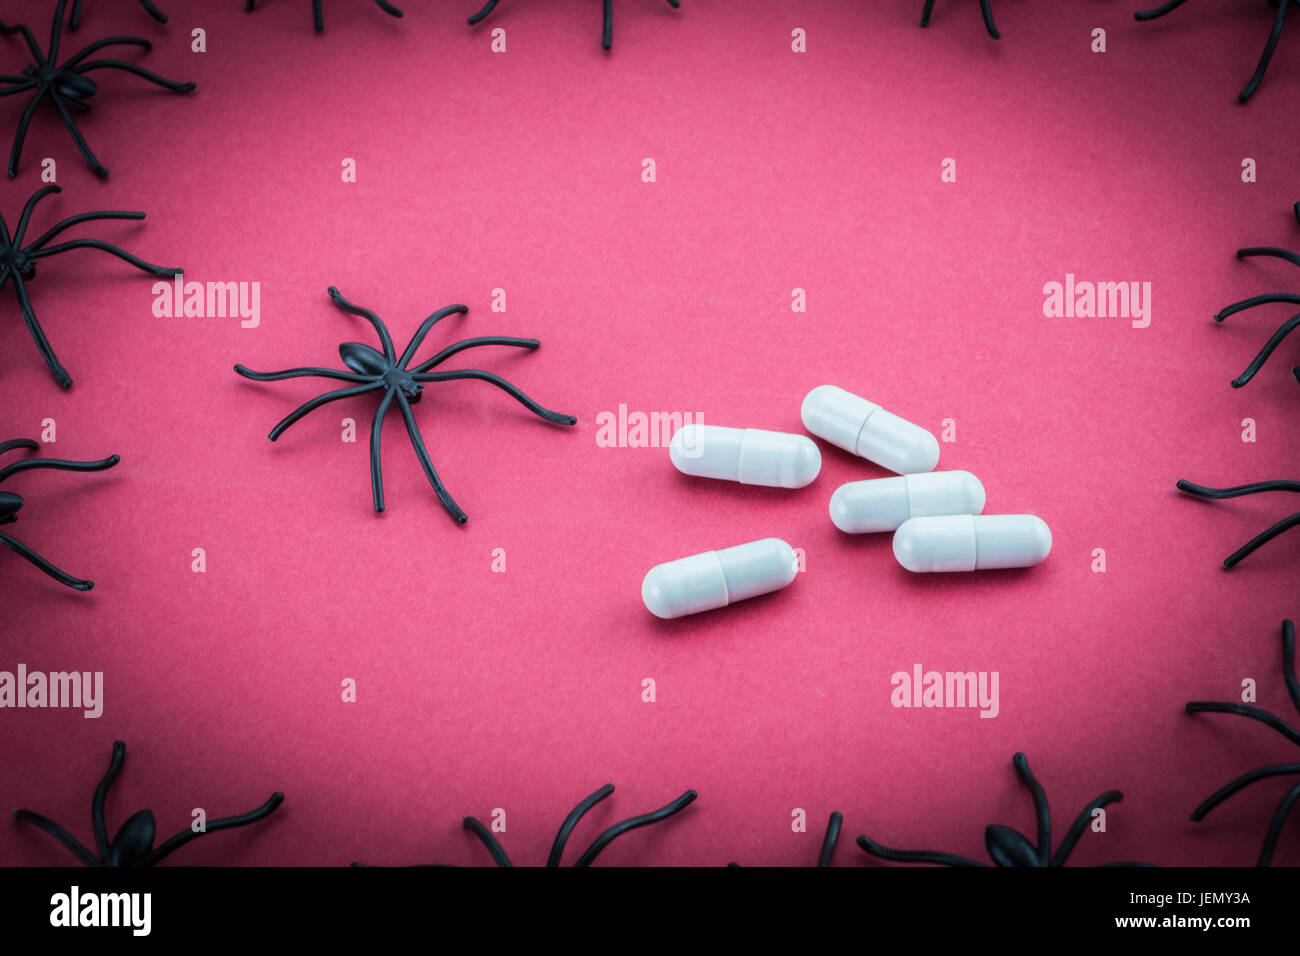 Spinnen in Kapseln, Konzept-Phobie zu Arzneimitteln Stockfoto